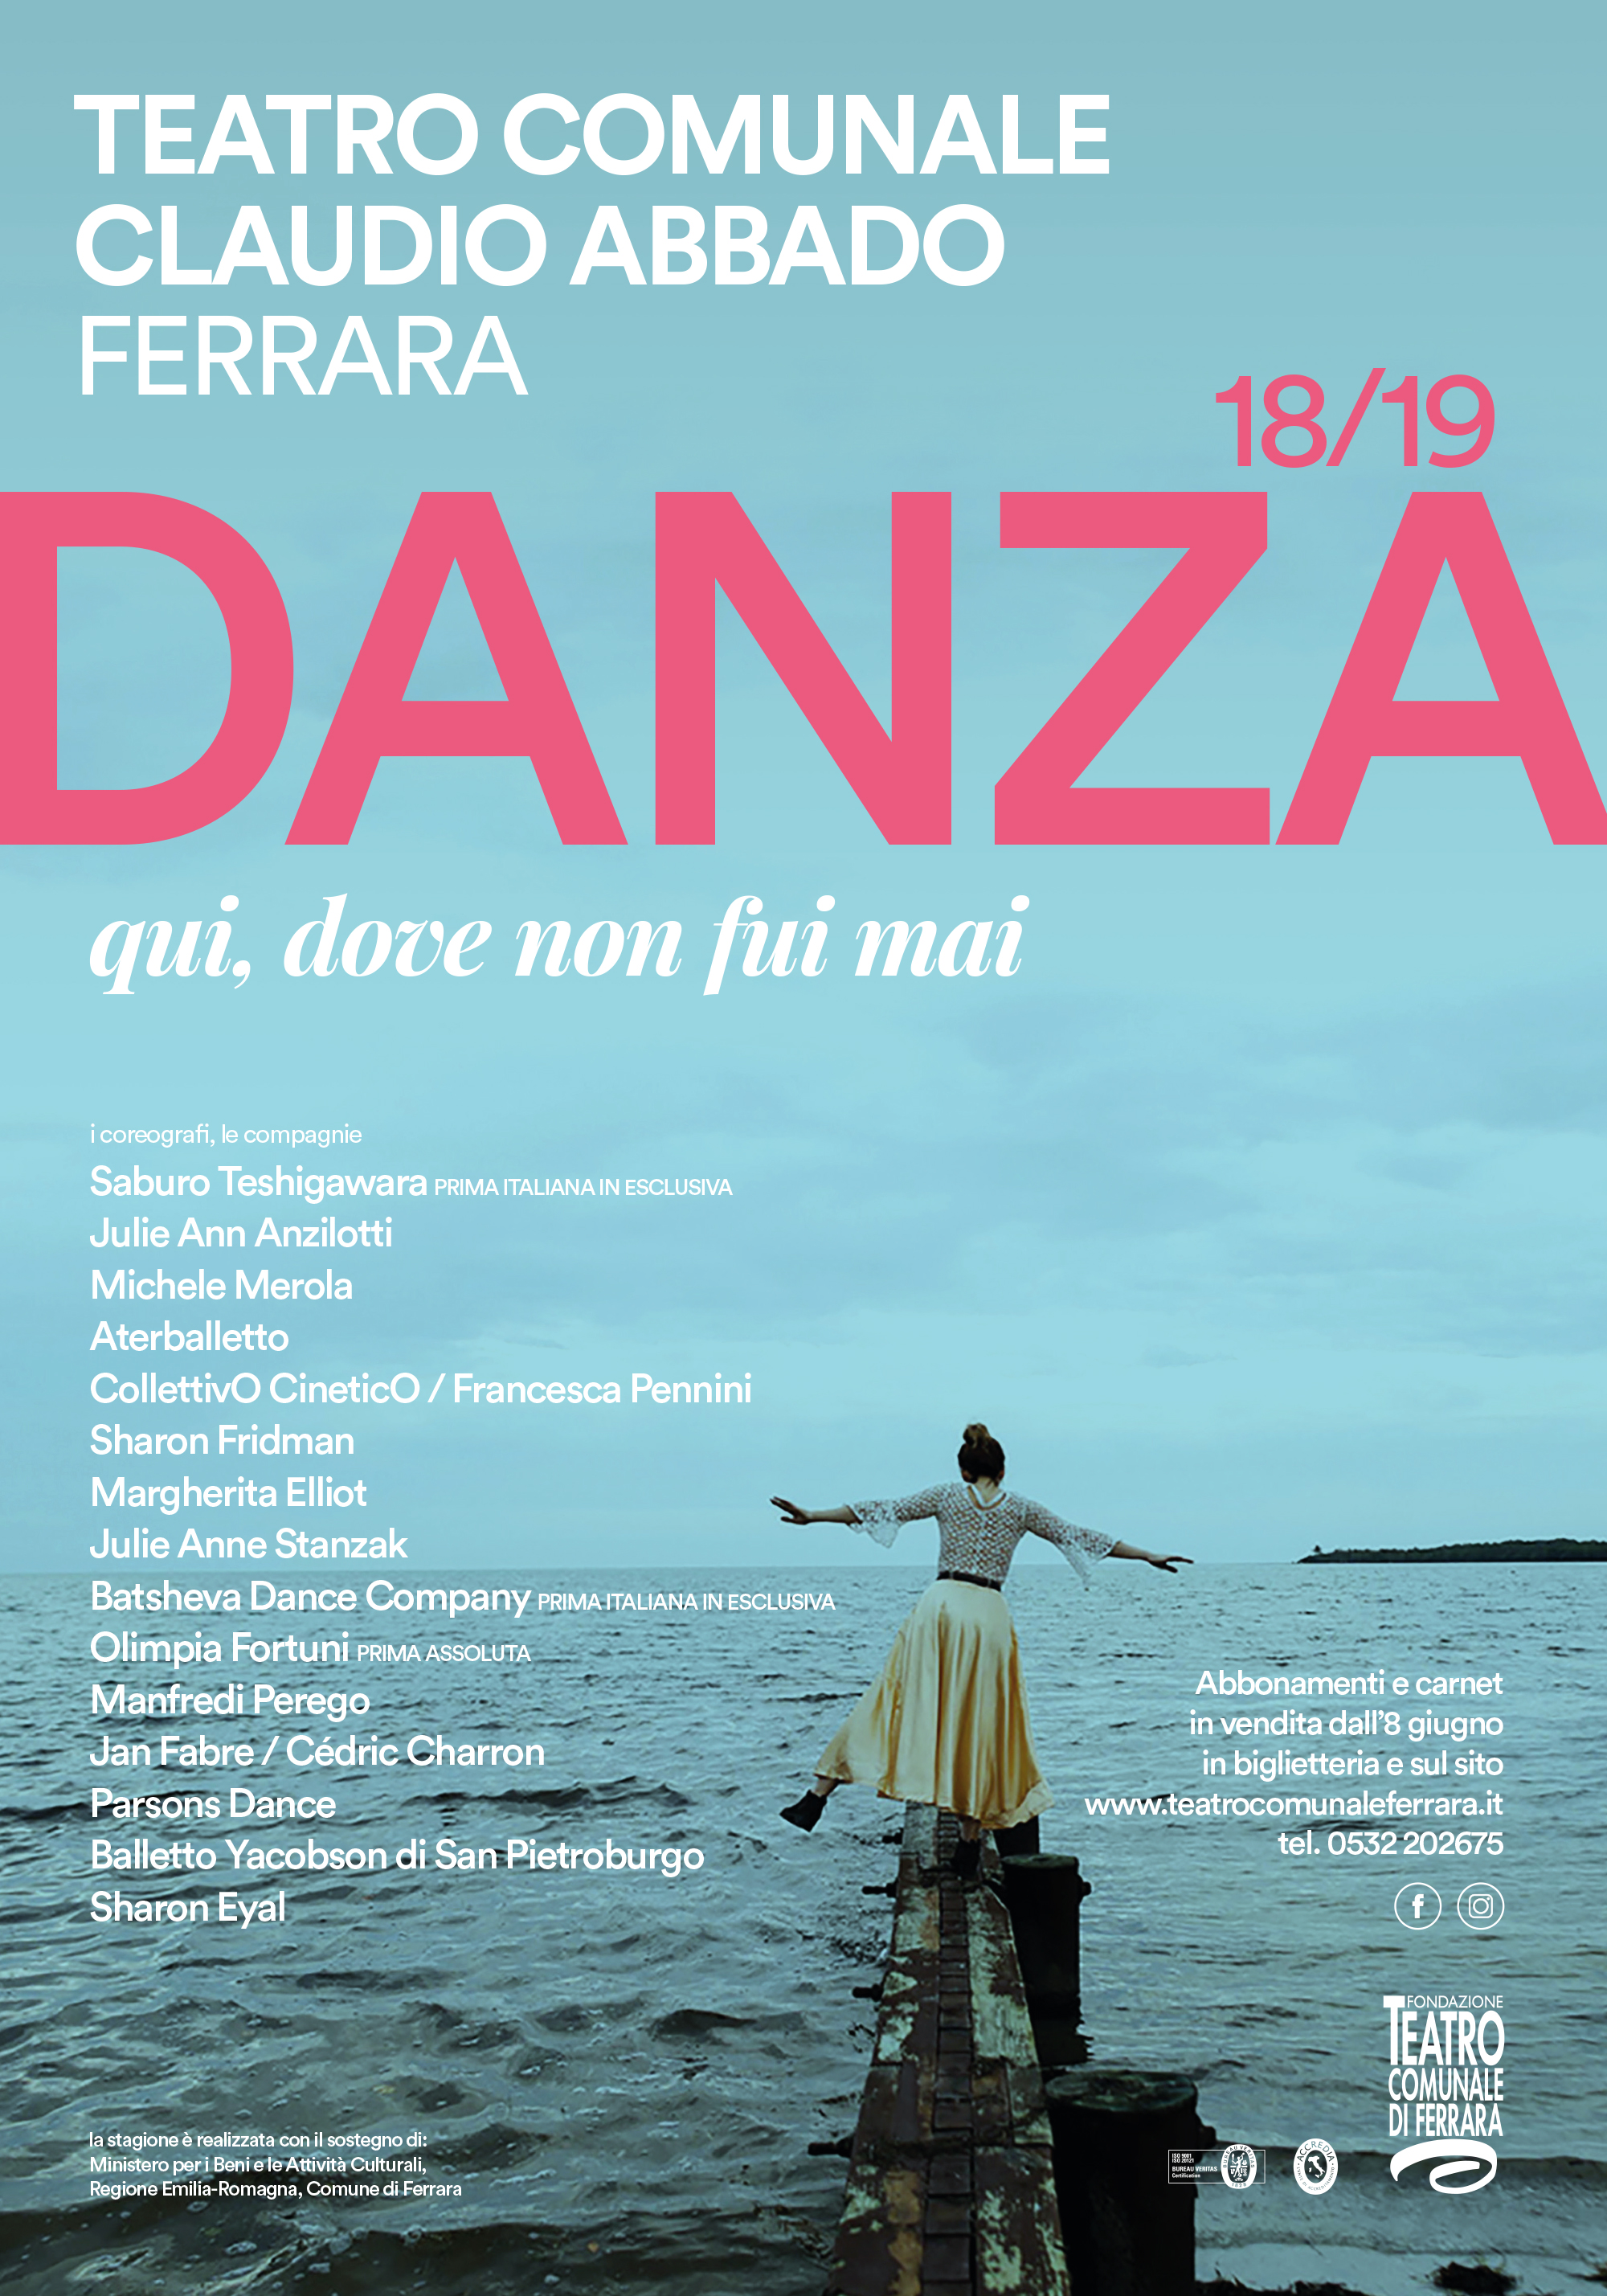 Featured image for “Teatro Comunale di Ferrara 2018/2019”